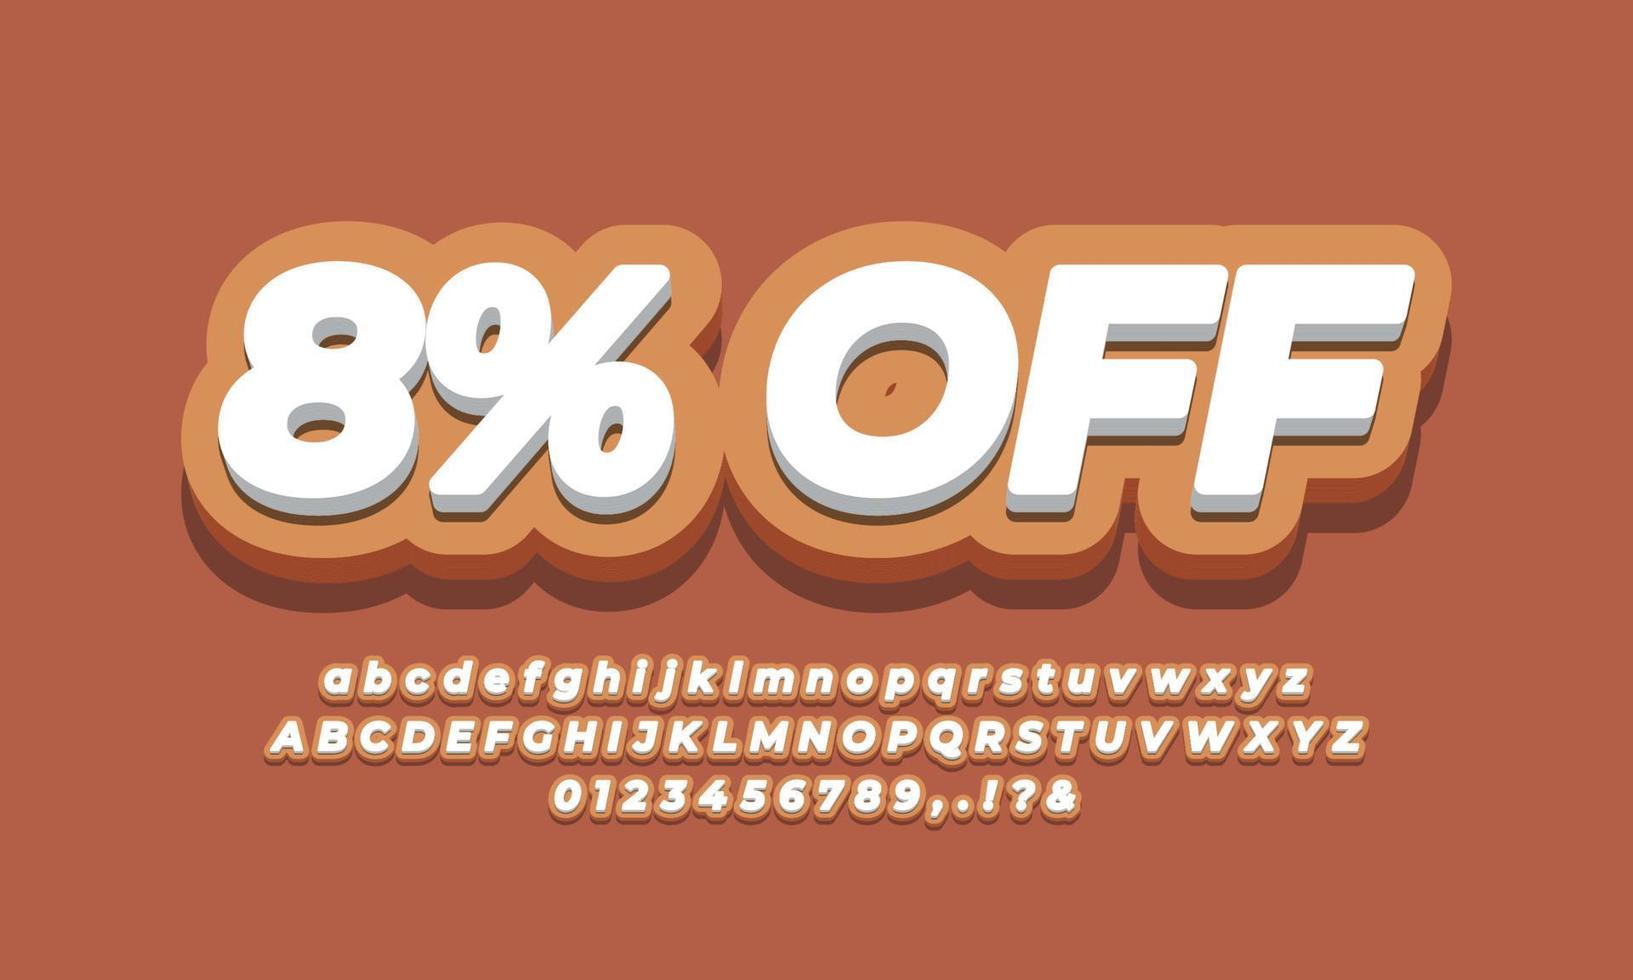 8 percent  off eight percent sale discount promotion text  3d orange vector